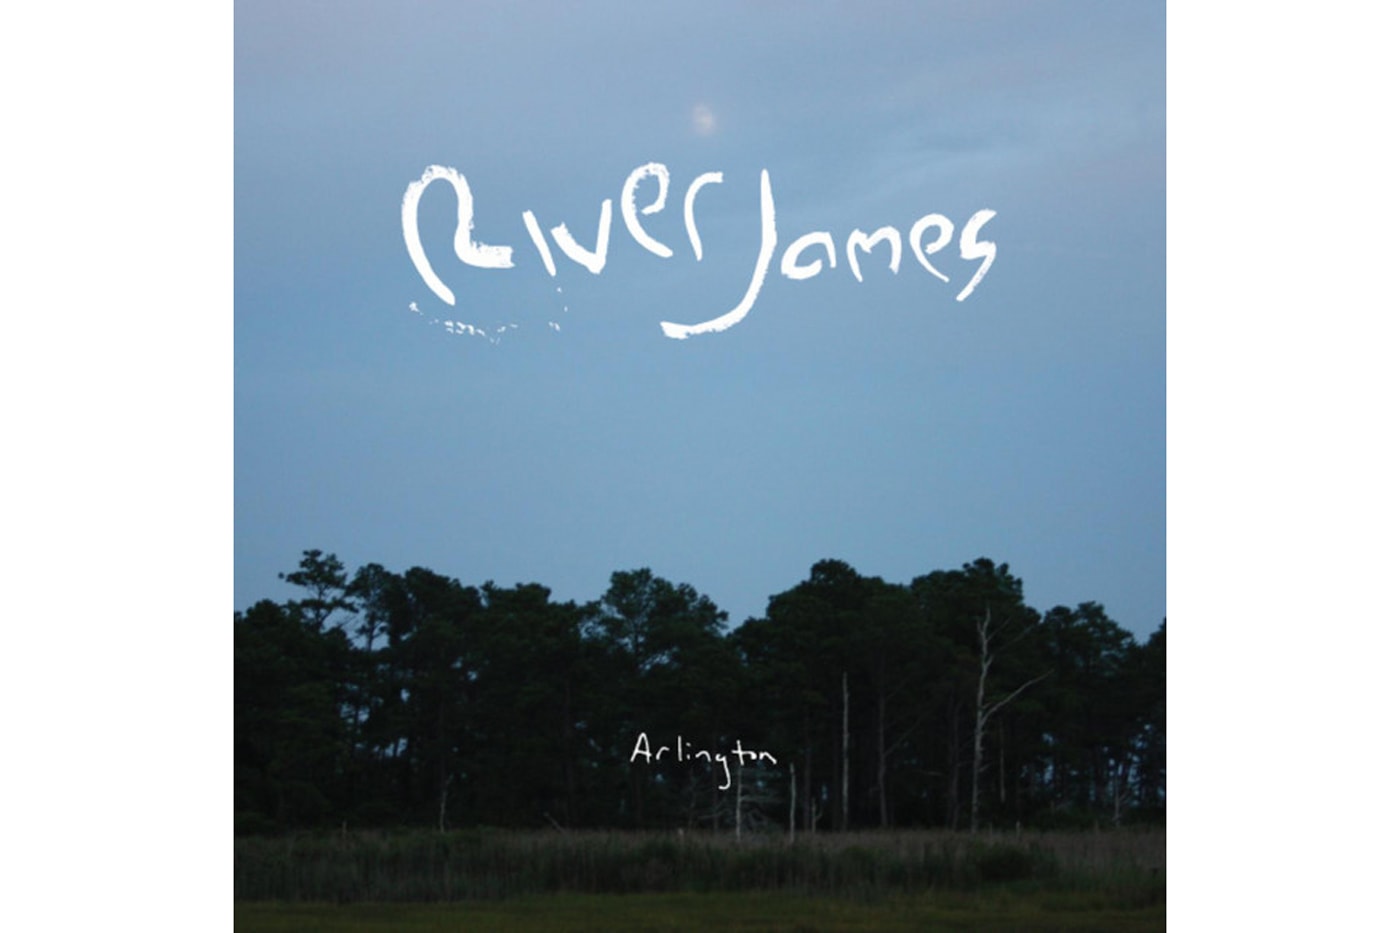 River James - Arlington